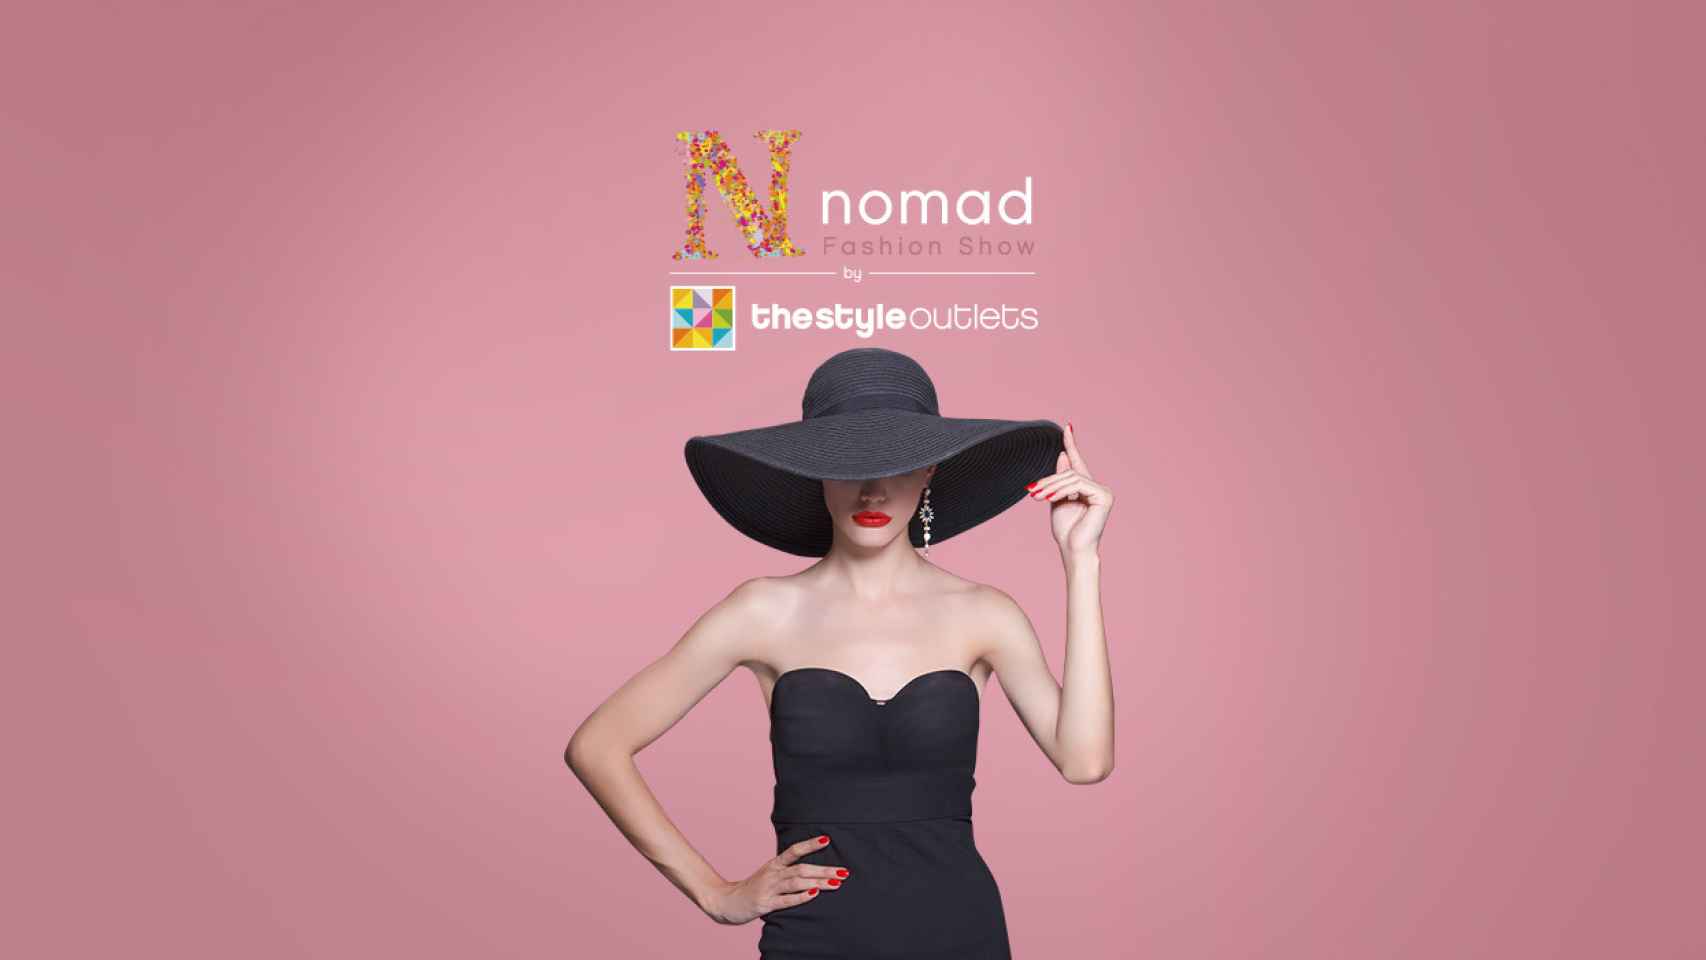 Nomad Fashion Show en una imagen promocional.